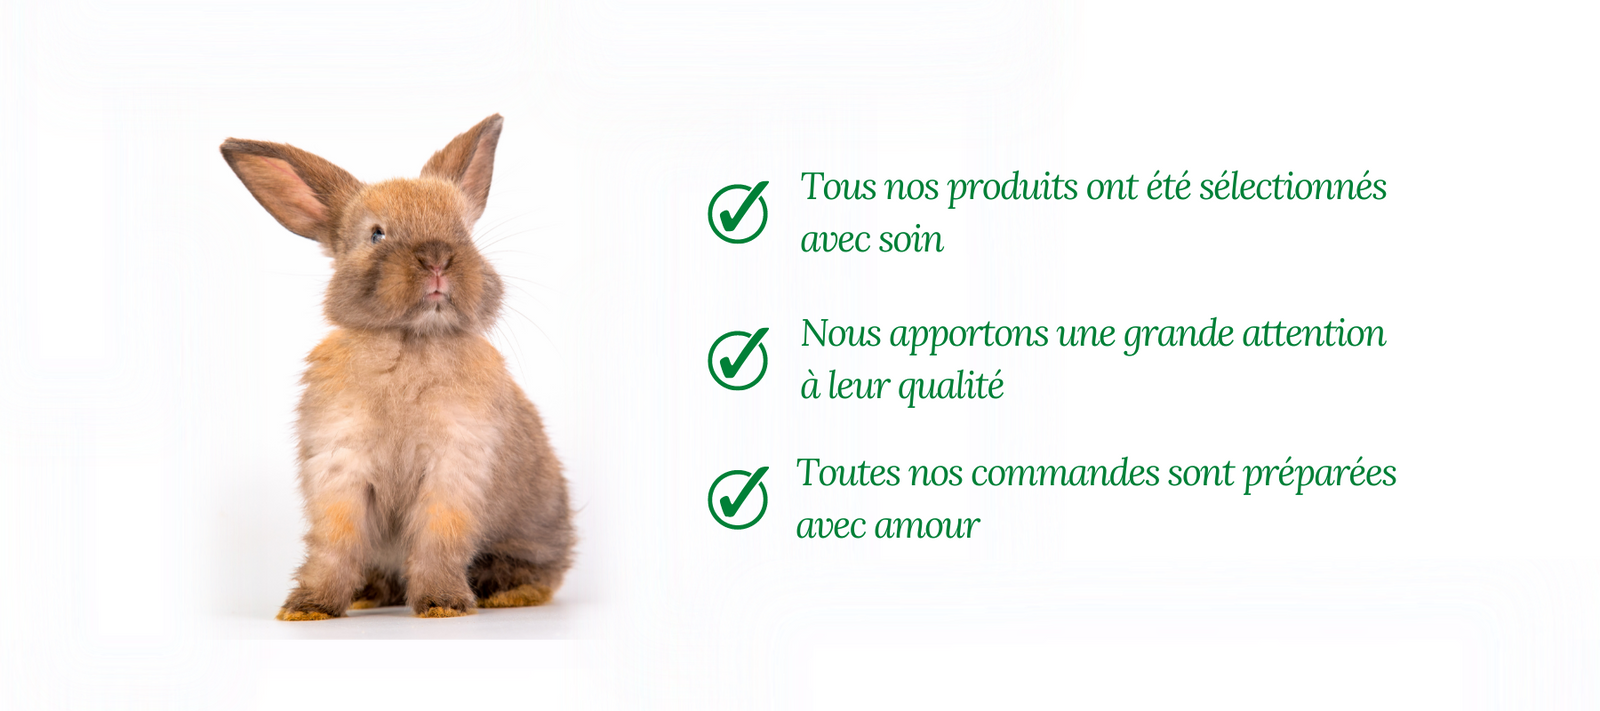 Protege cable lapin - Accessoire pour Lapin - Mon lapin Nain